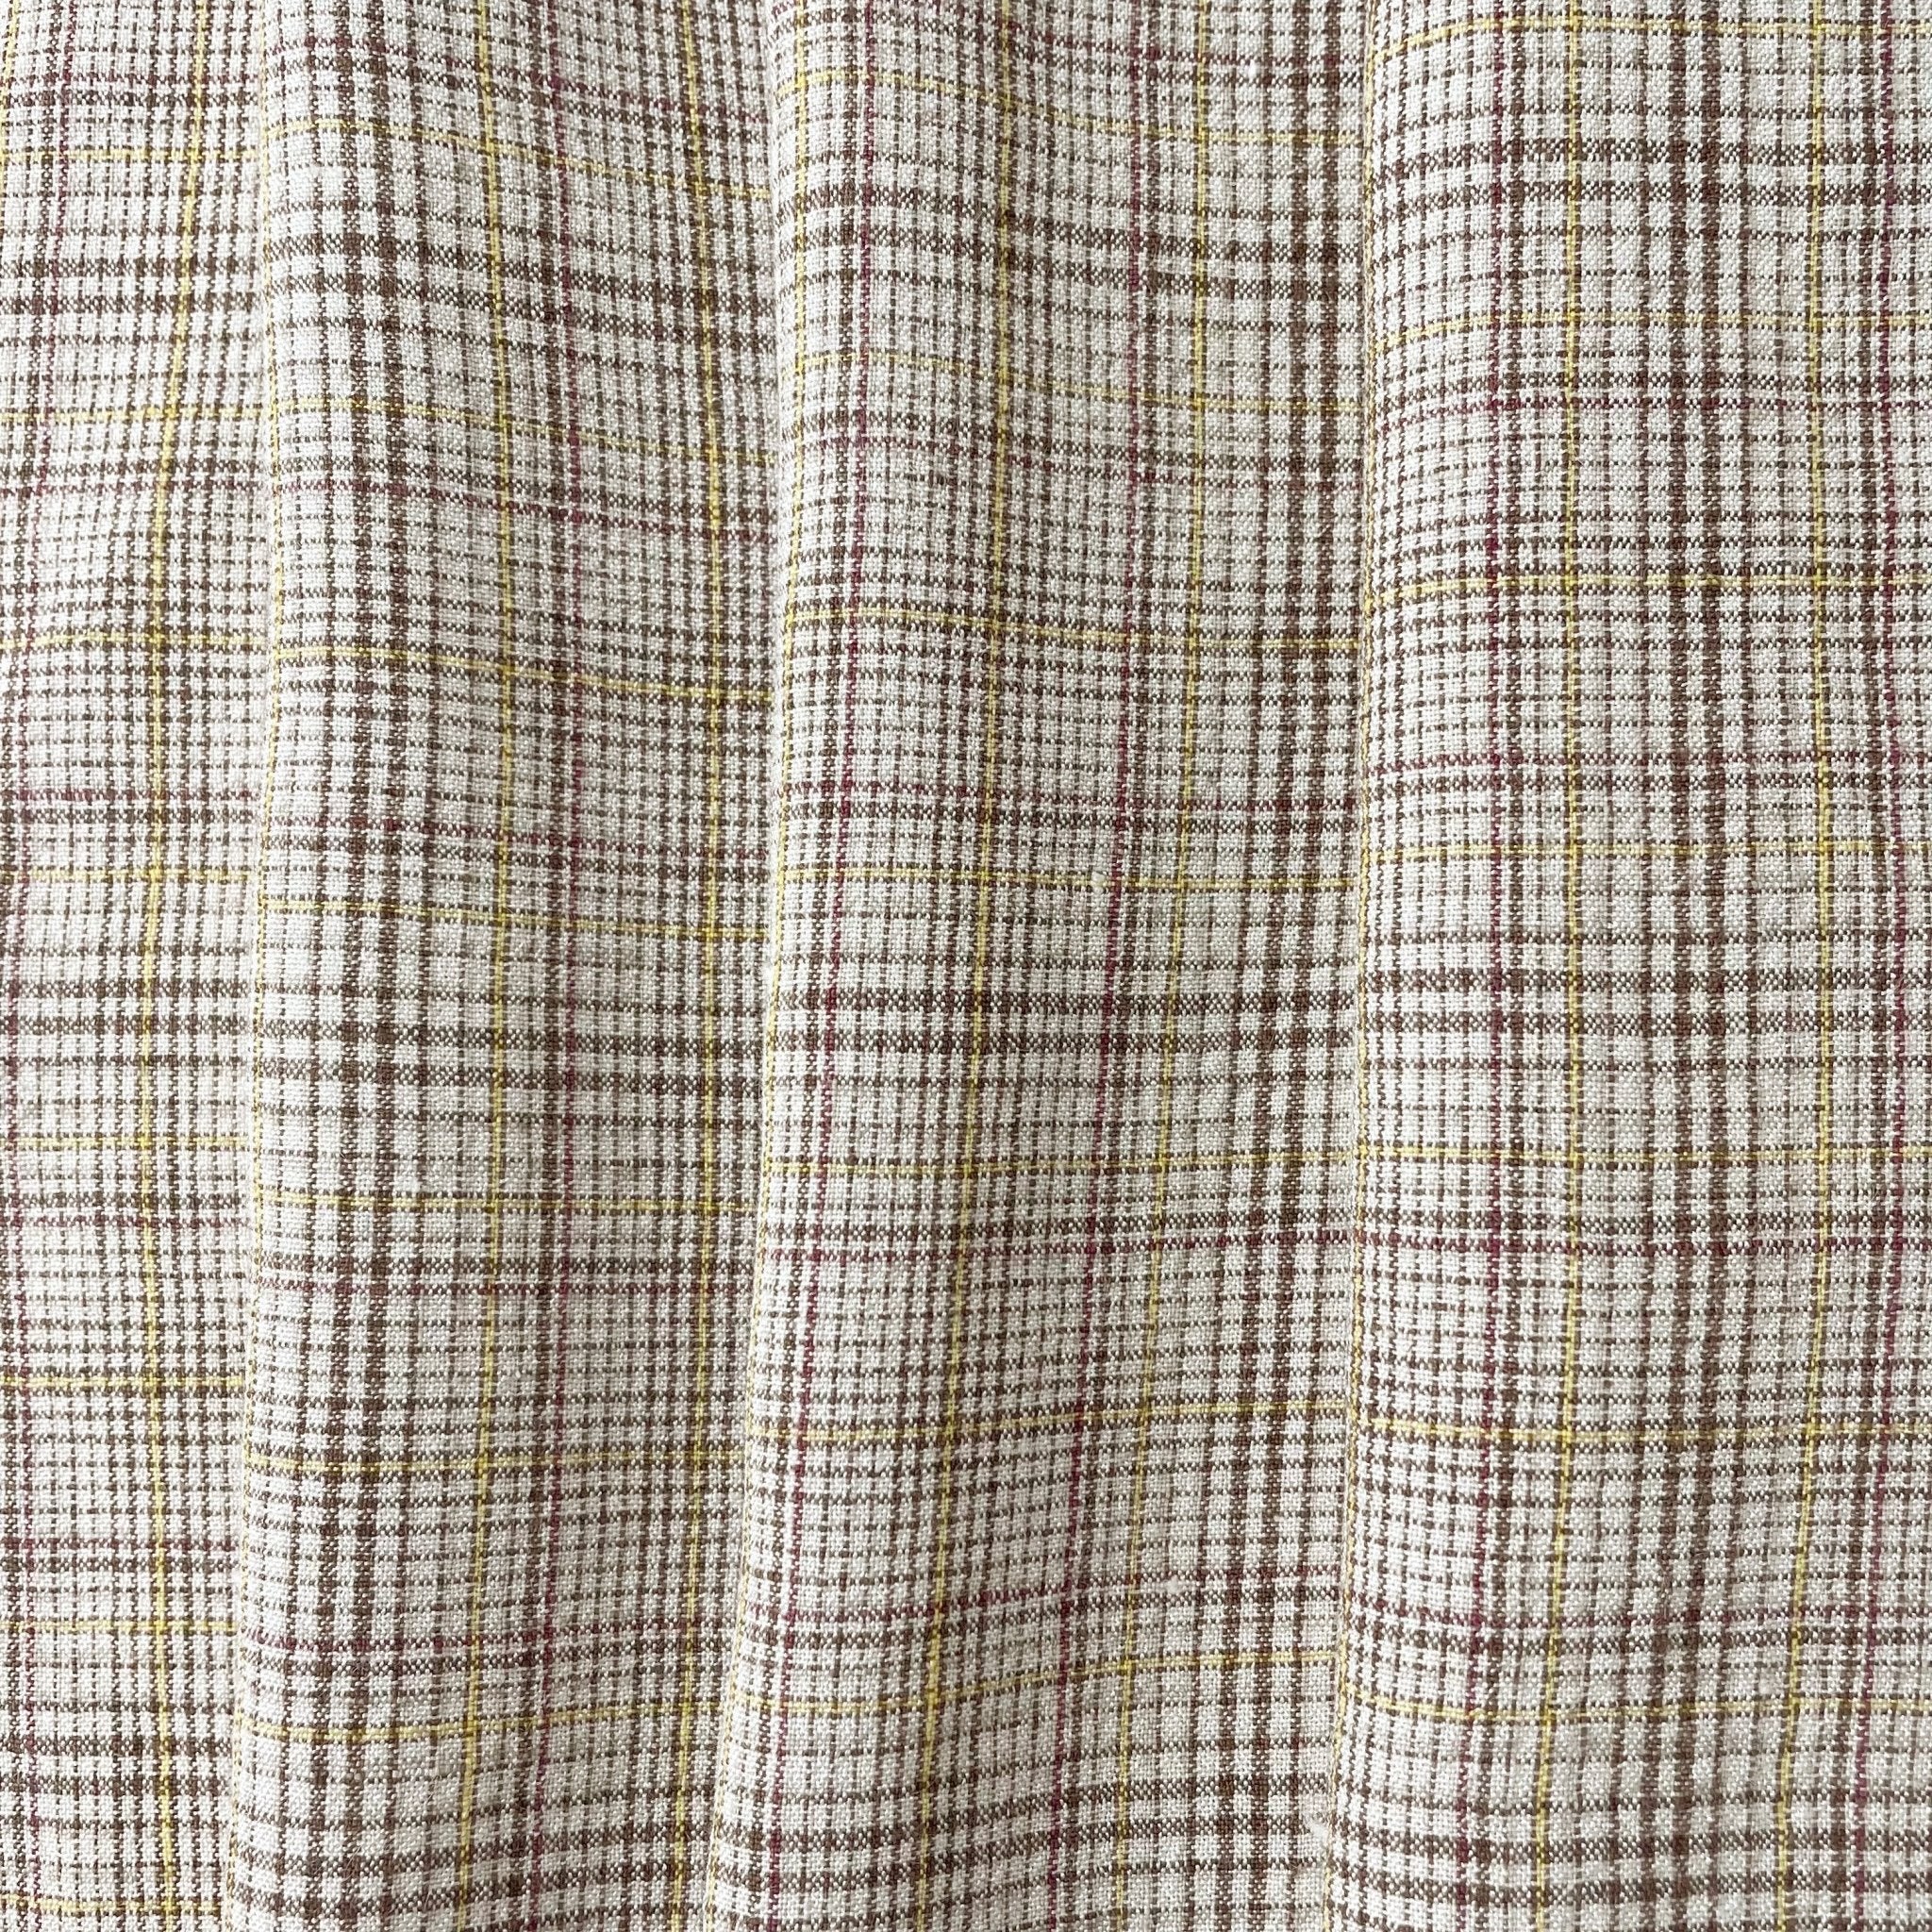 Linen Rayon Cotton Check Fabric 7377 - The Linen Lab - 7377 CHECK